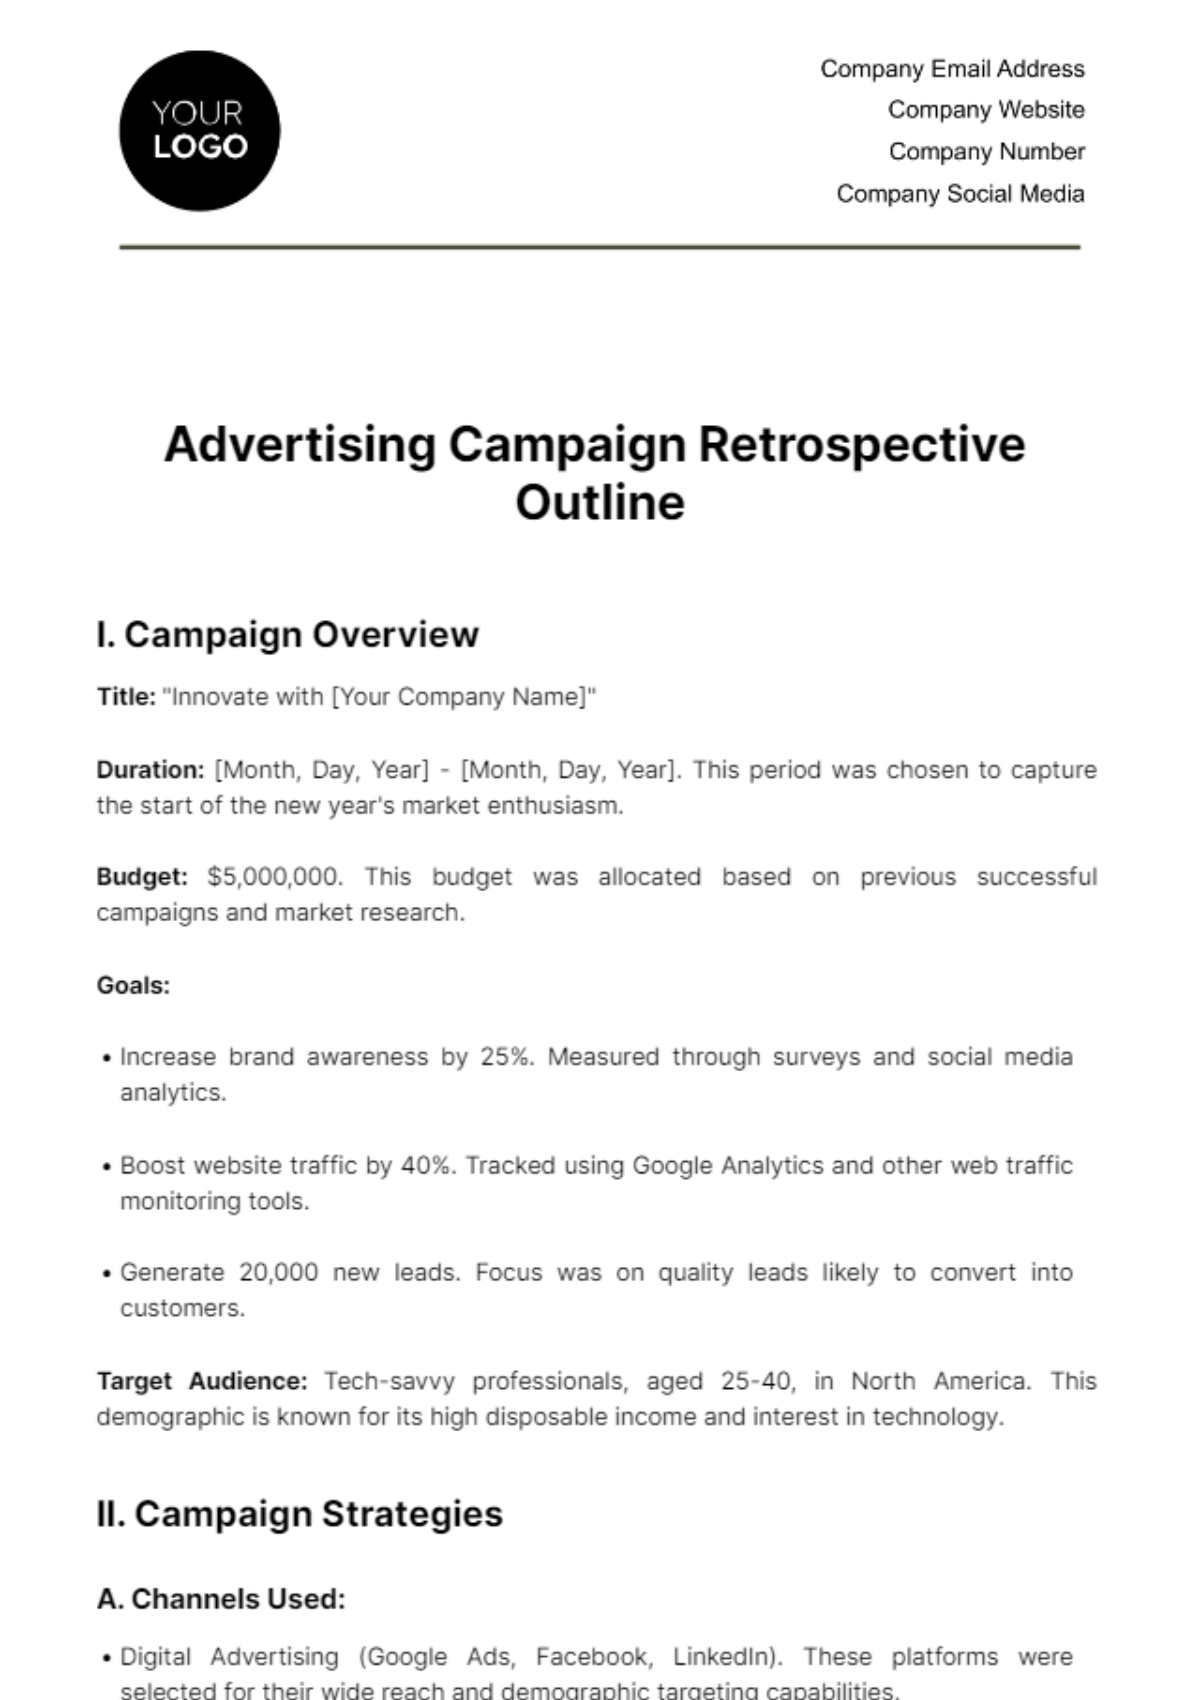 Advertising Campaign Retrospective Outline Template